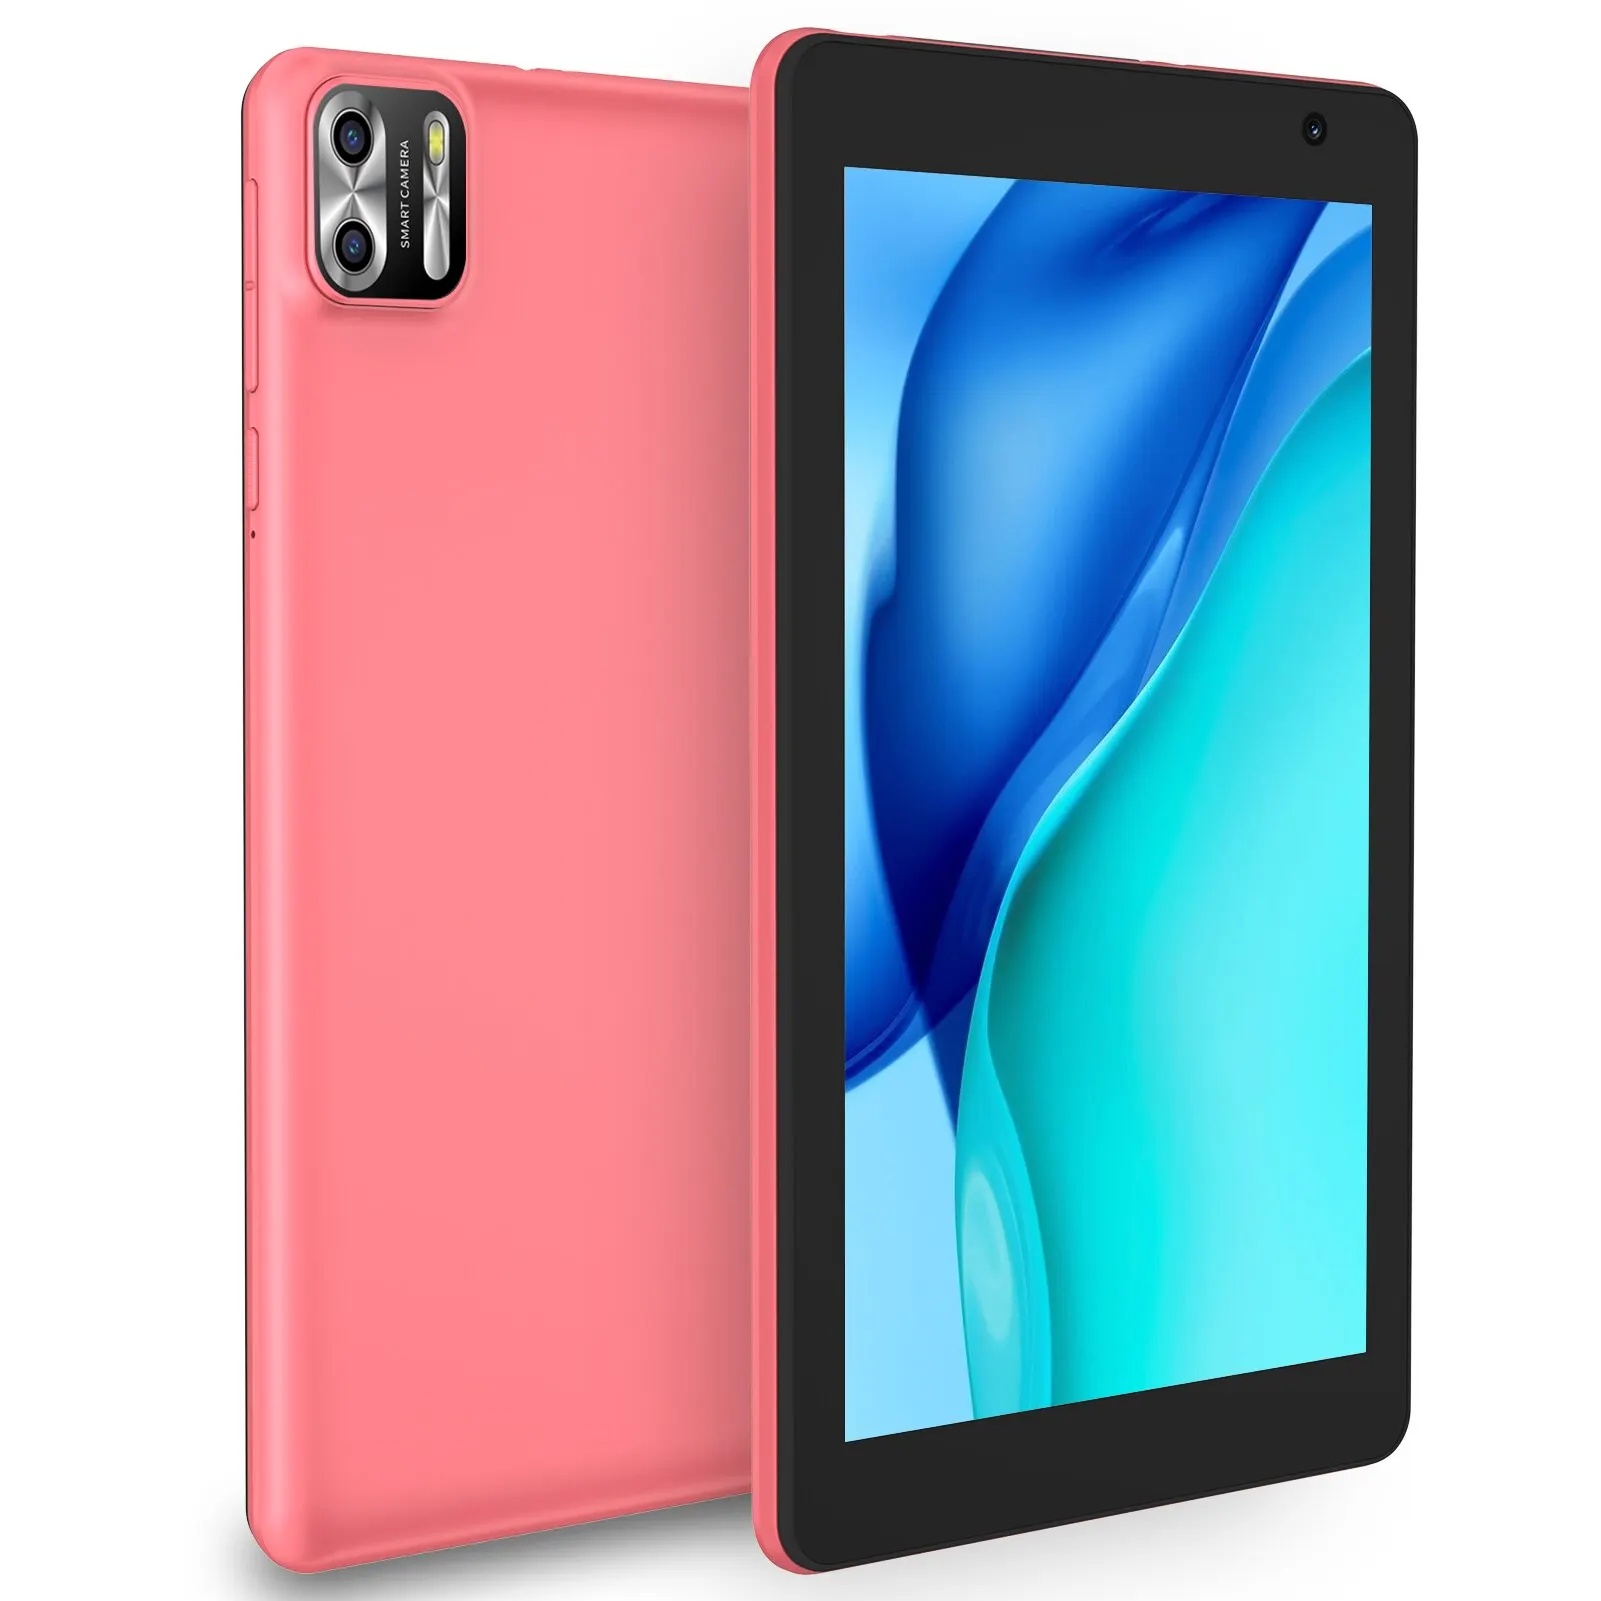 Pritom 8 -calowy tablet Android 13, 8 GB (4+4 ekspand) RAM 64 GB ROM, 1 TB Expand, 1280x800 IPS Ekran 5000 mAh Bateria, podwójna kamera, Wi -Fi